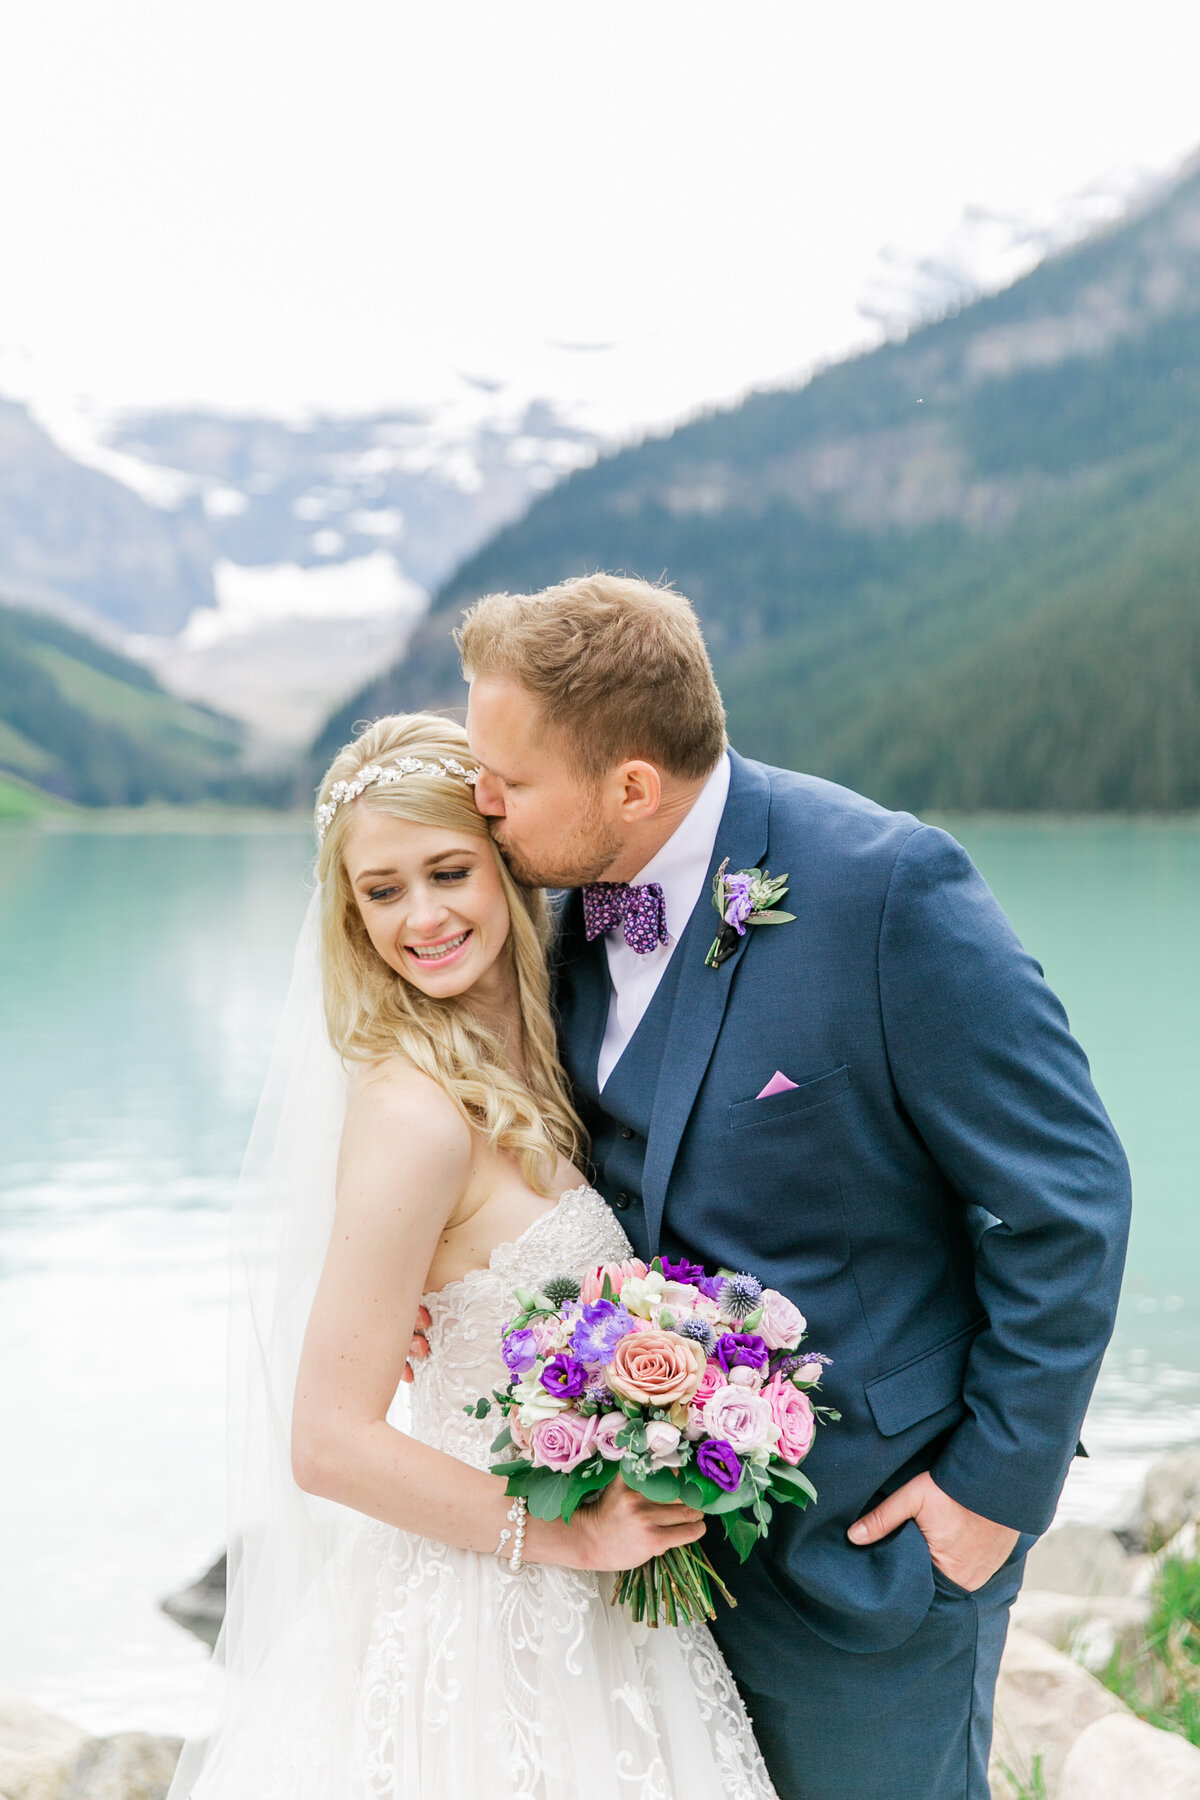 Karlie Colleen Photography - Fairmont Chateau Lake Louise Wedding - Banff Canada - Sara & Drew Forsberg-1001